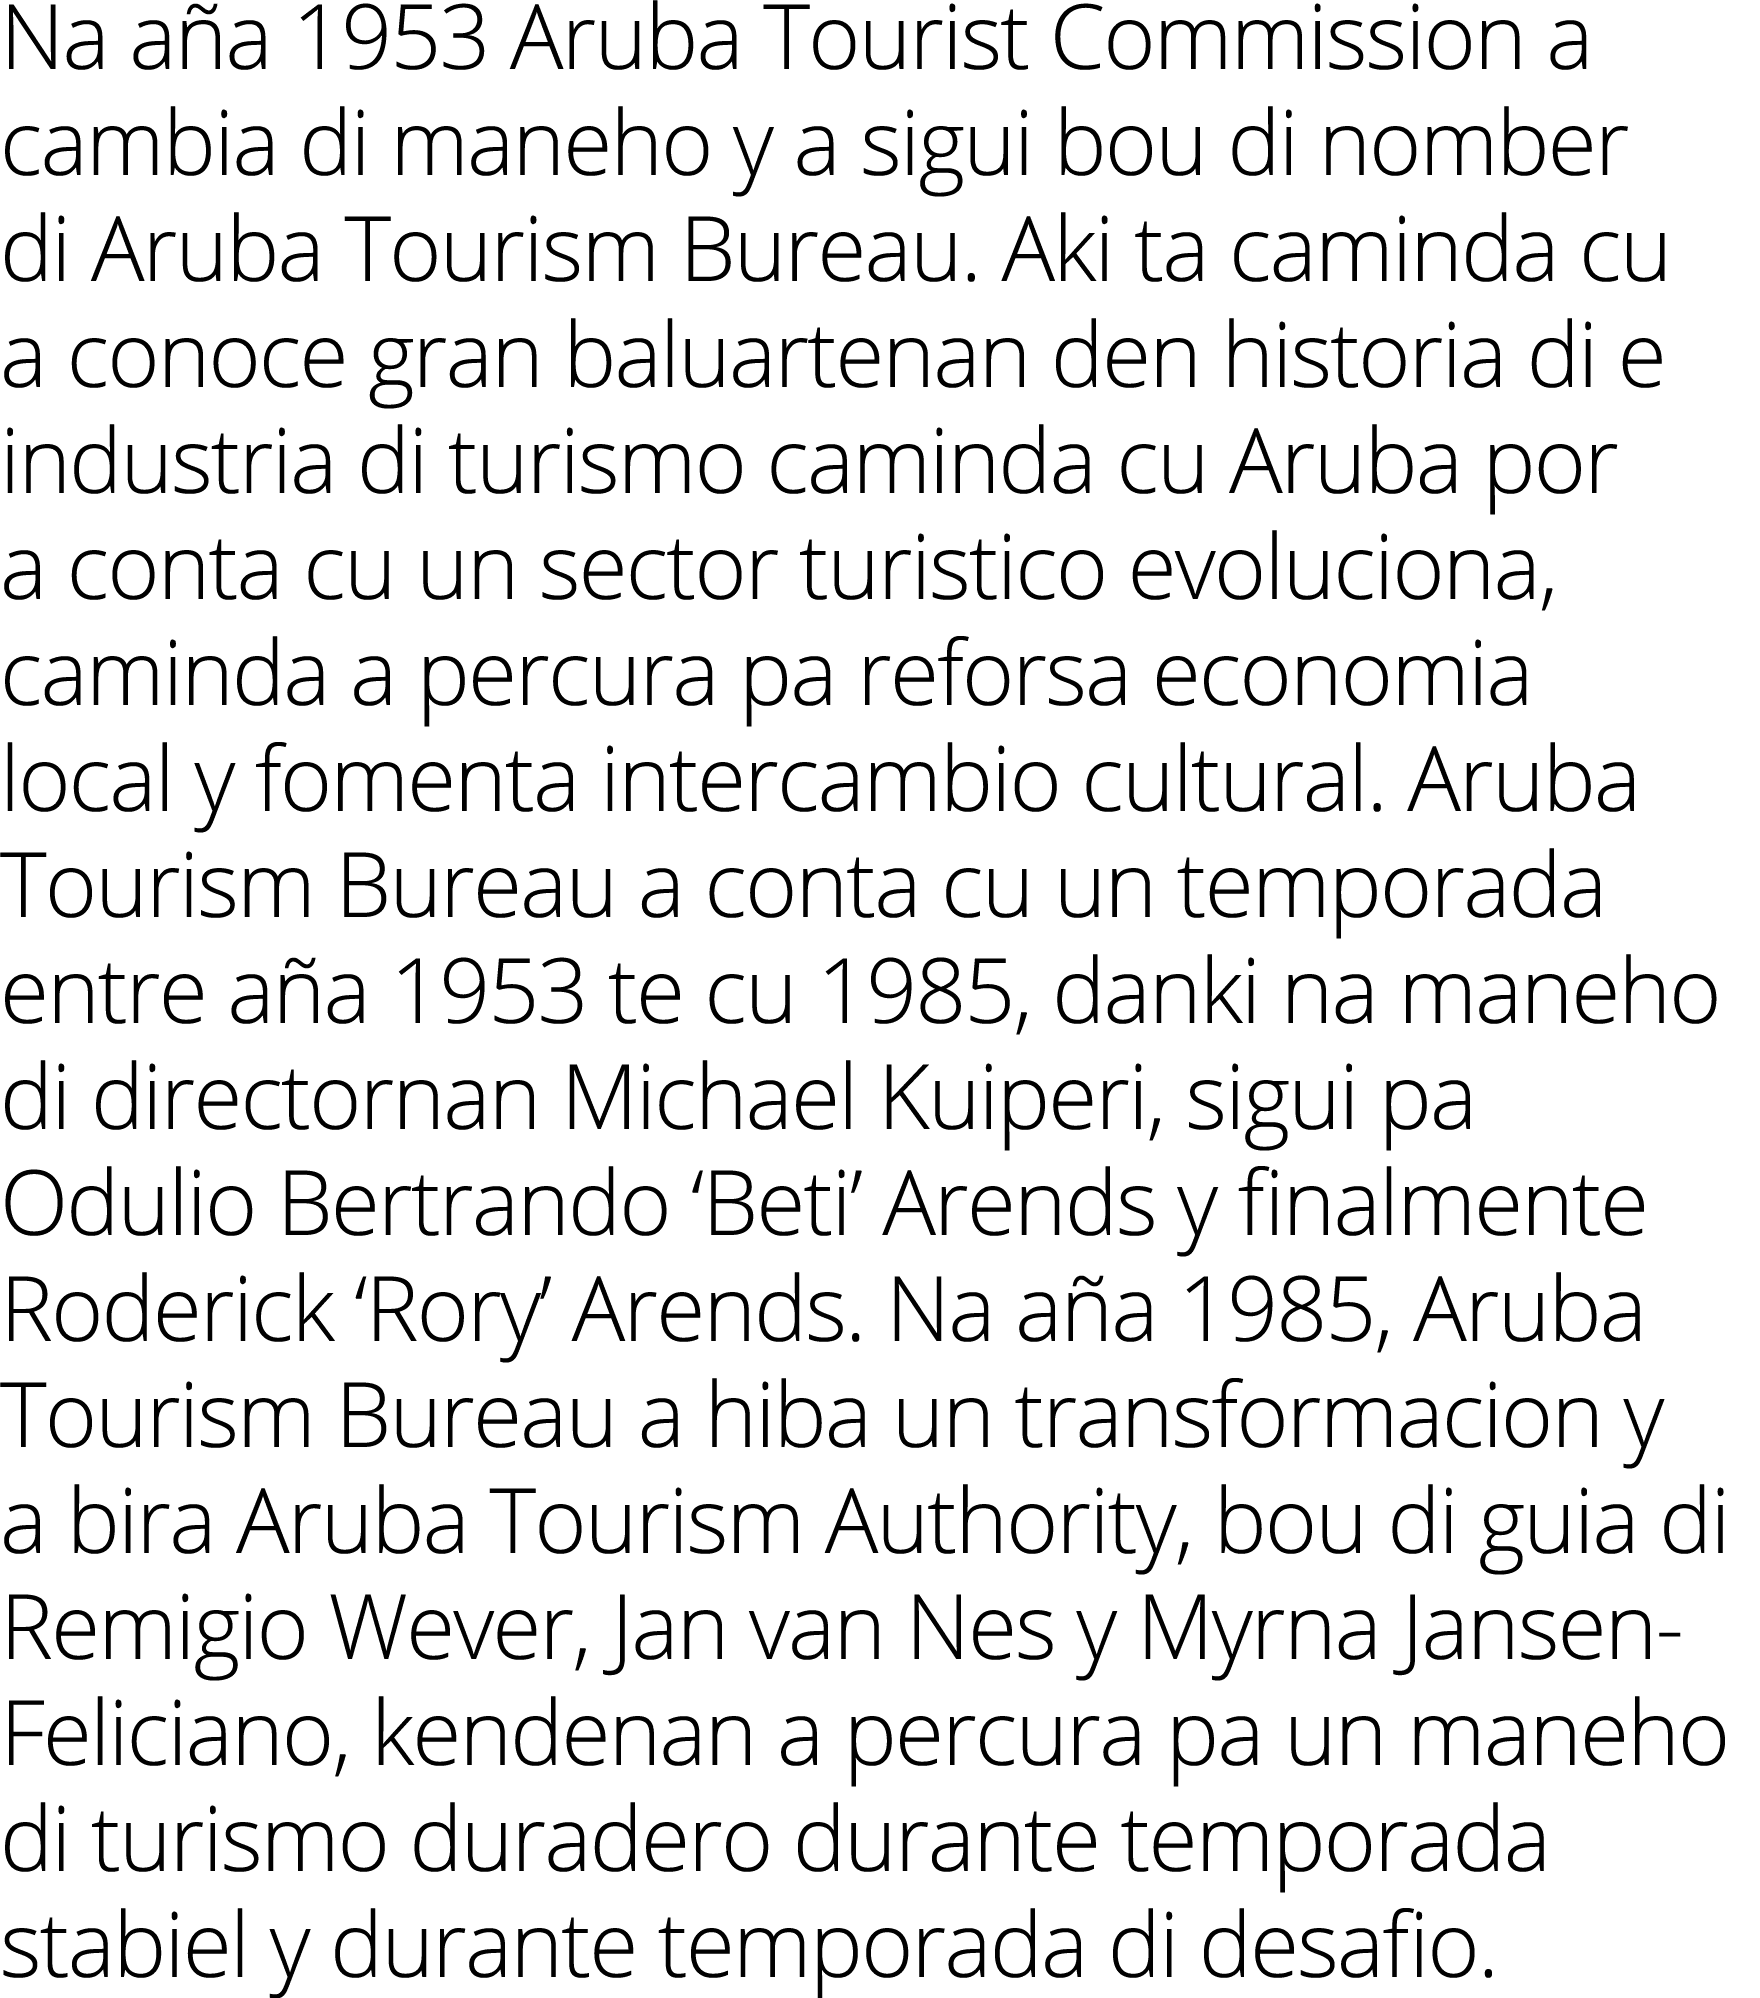 Na aña 1953 Aruba Tourist Commission a cambia di maneho y a sigui bou di nomber di Aruba Tourism Bureau  Aki ta camin   